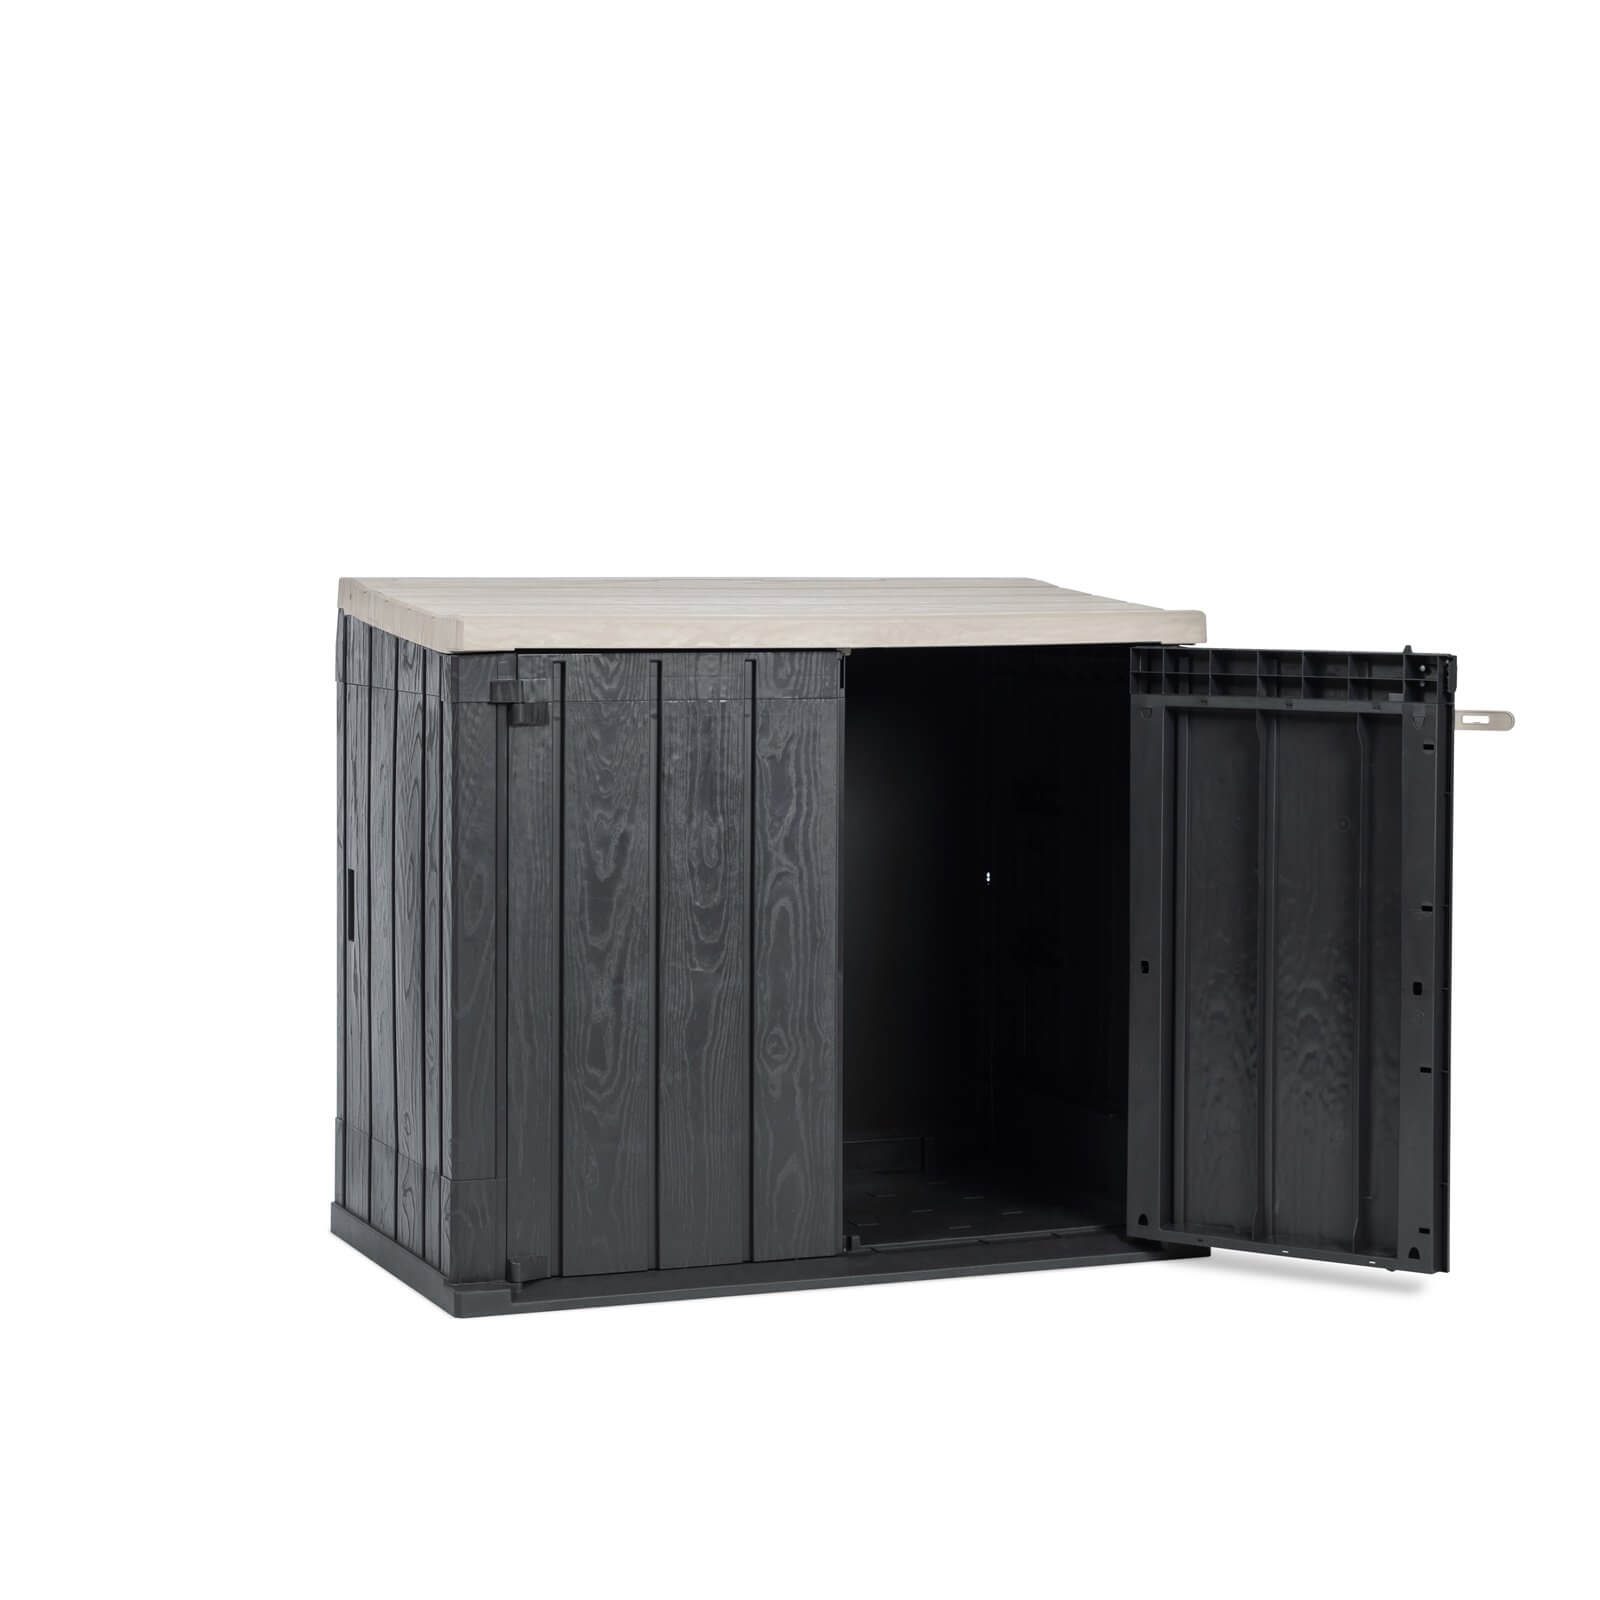 Toomax Stora Way XL 1270L Garden Storage Box in Warm Grey